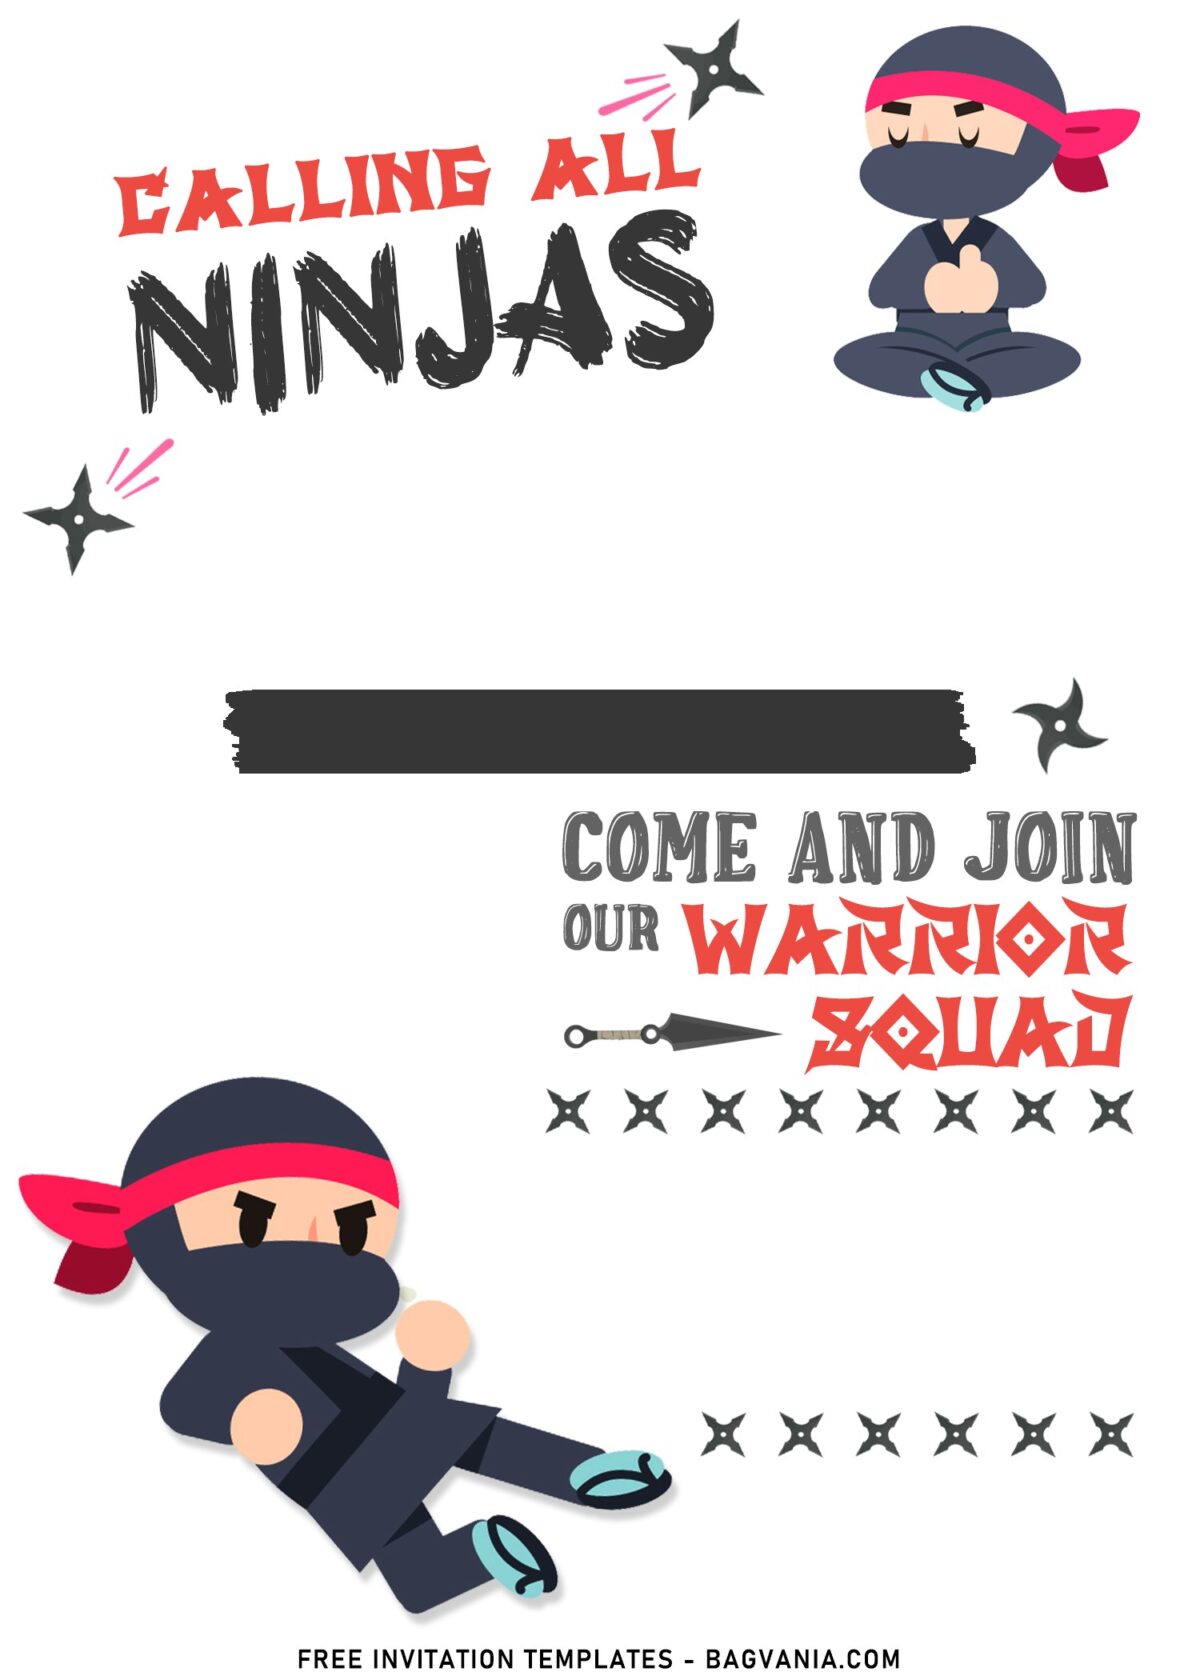 7+ Ninja Themed Birthday Invitation Templates For The Boys Birthday with Calling All Ninjas wording